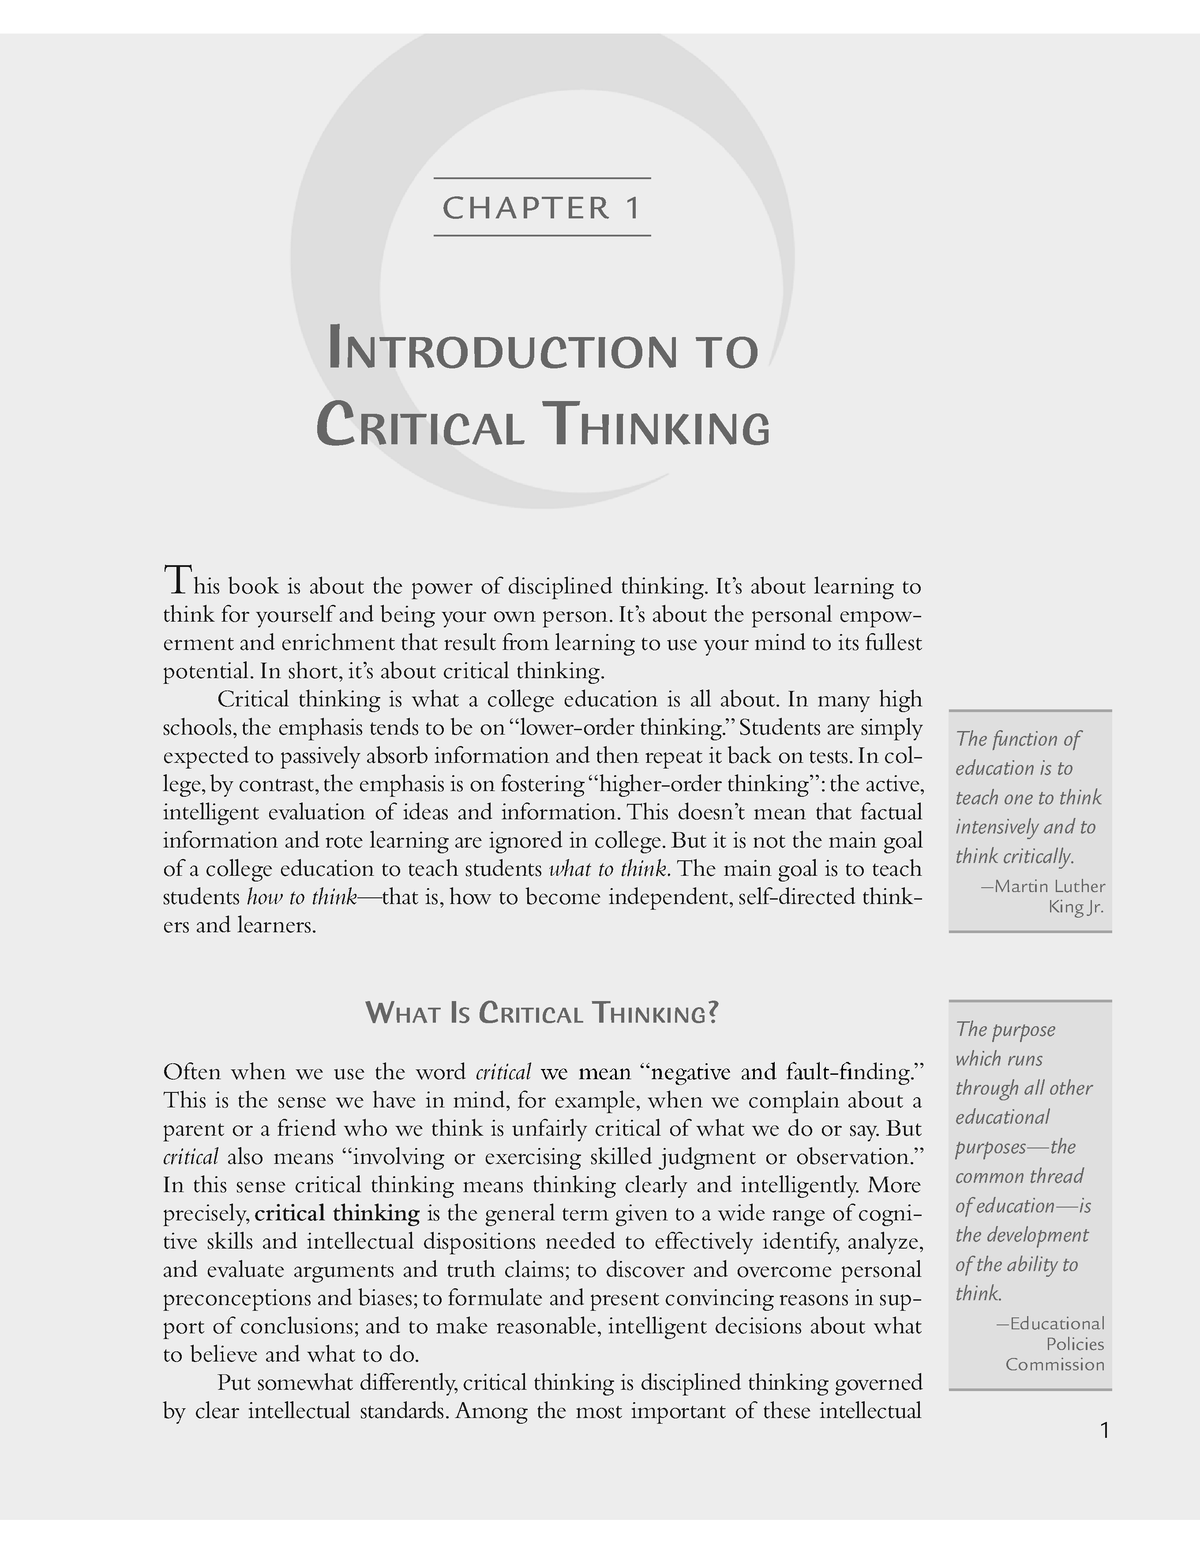 bowell and kemp critical thinking pdf